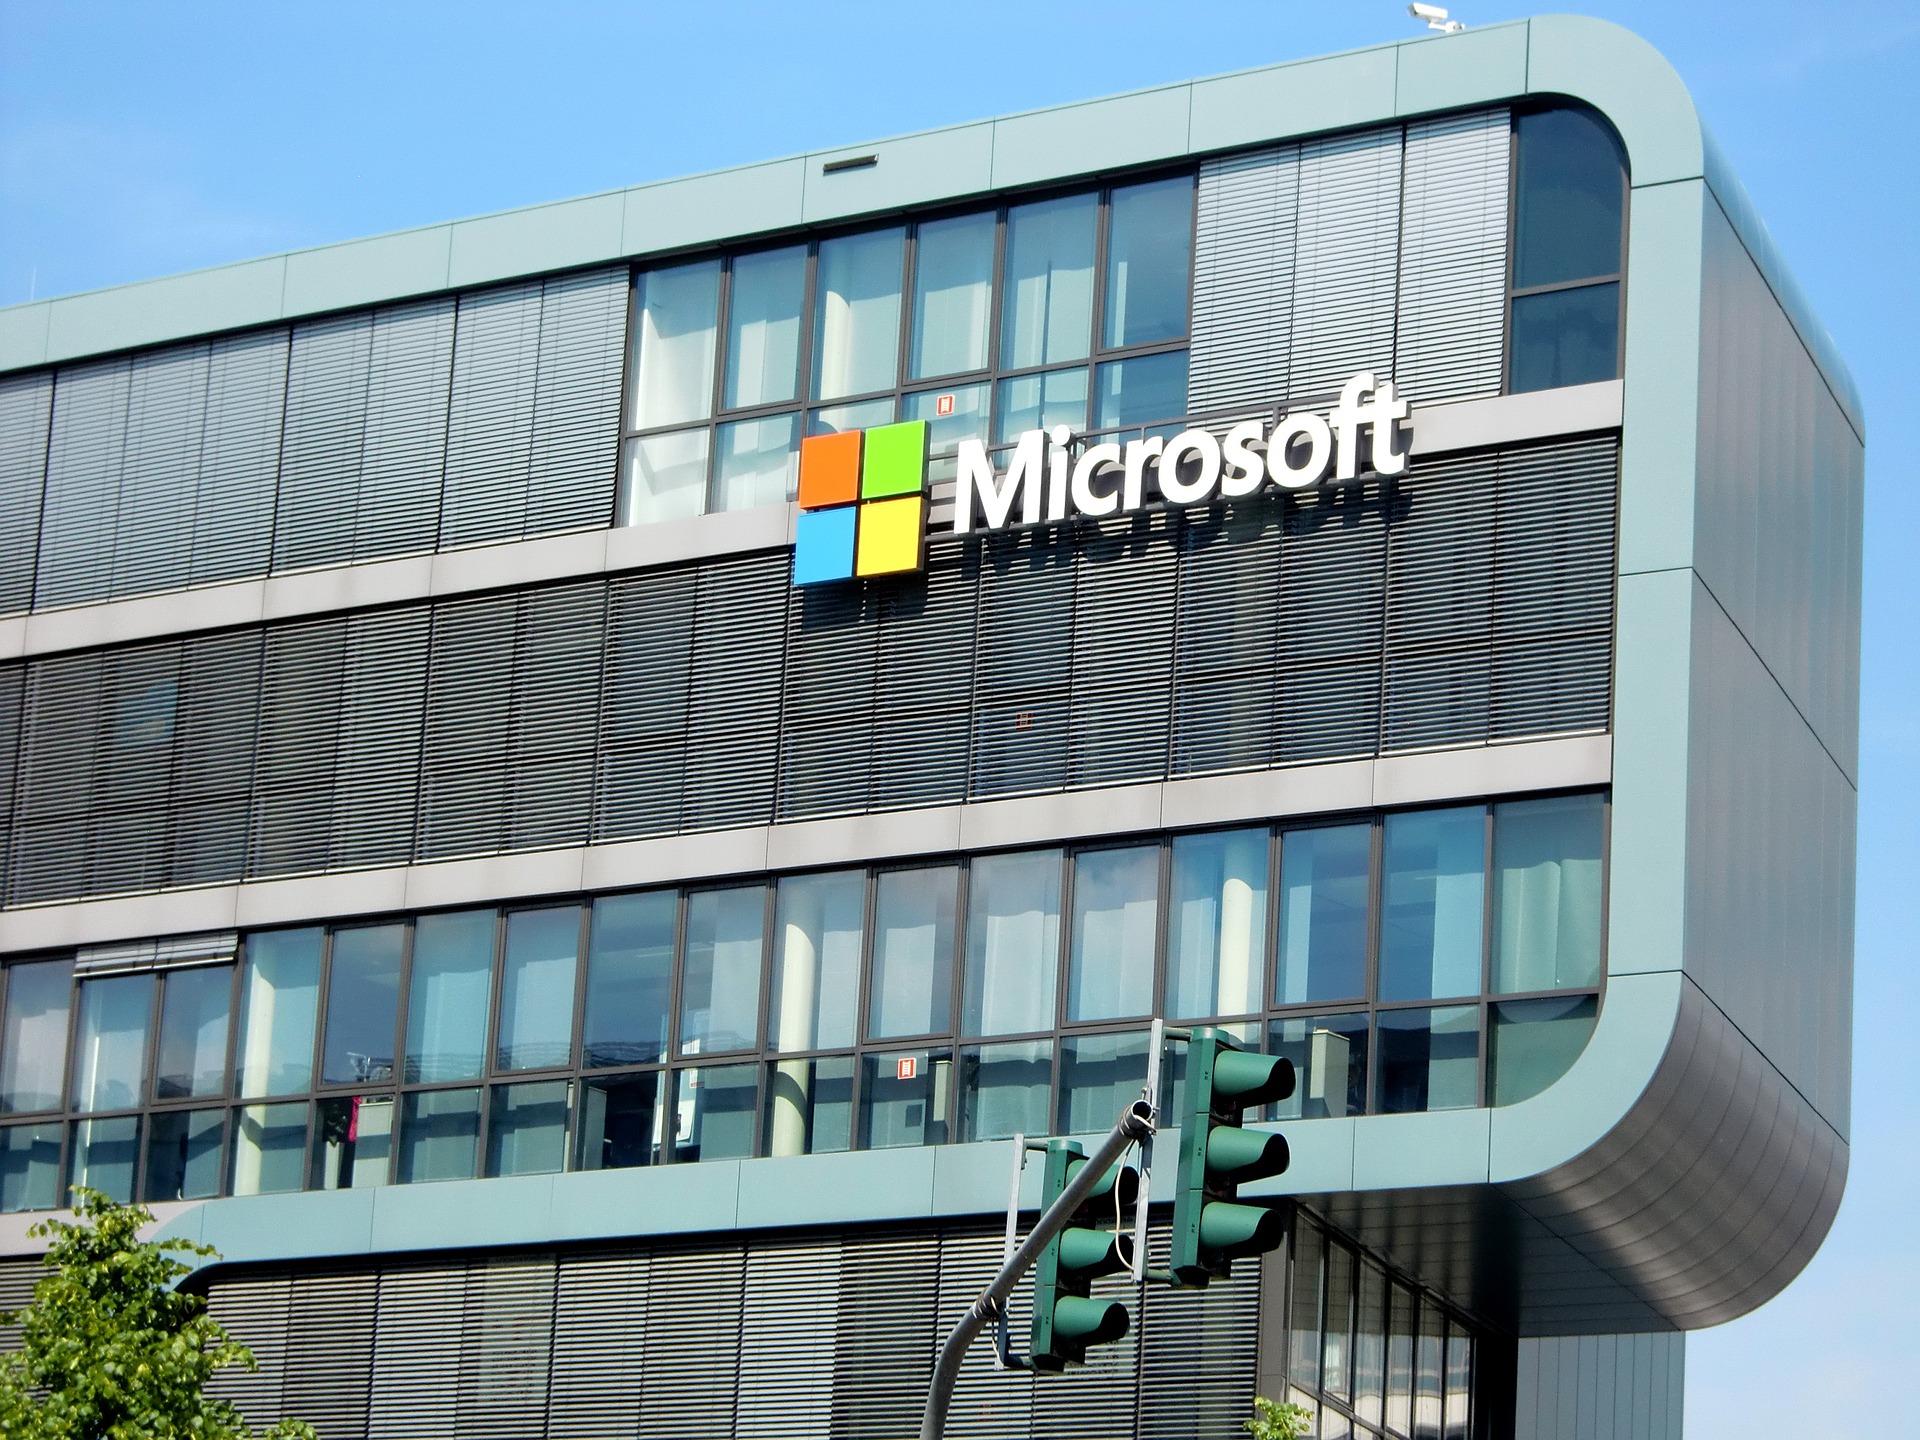 Microsoft building and Microsoft logo